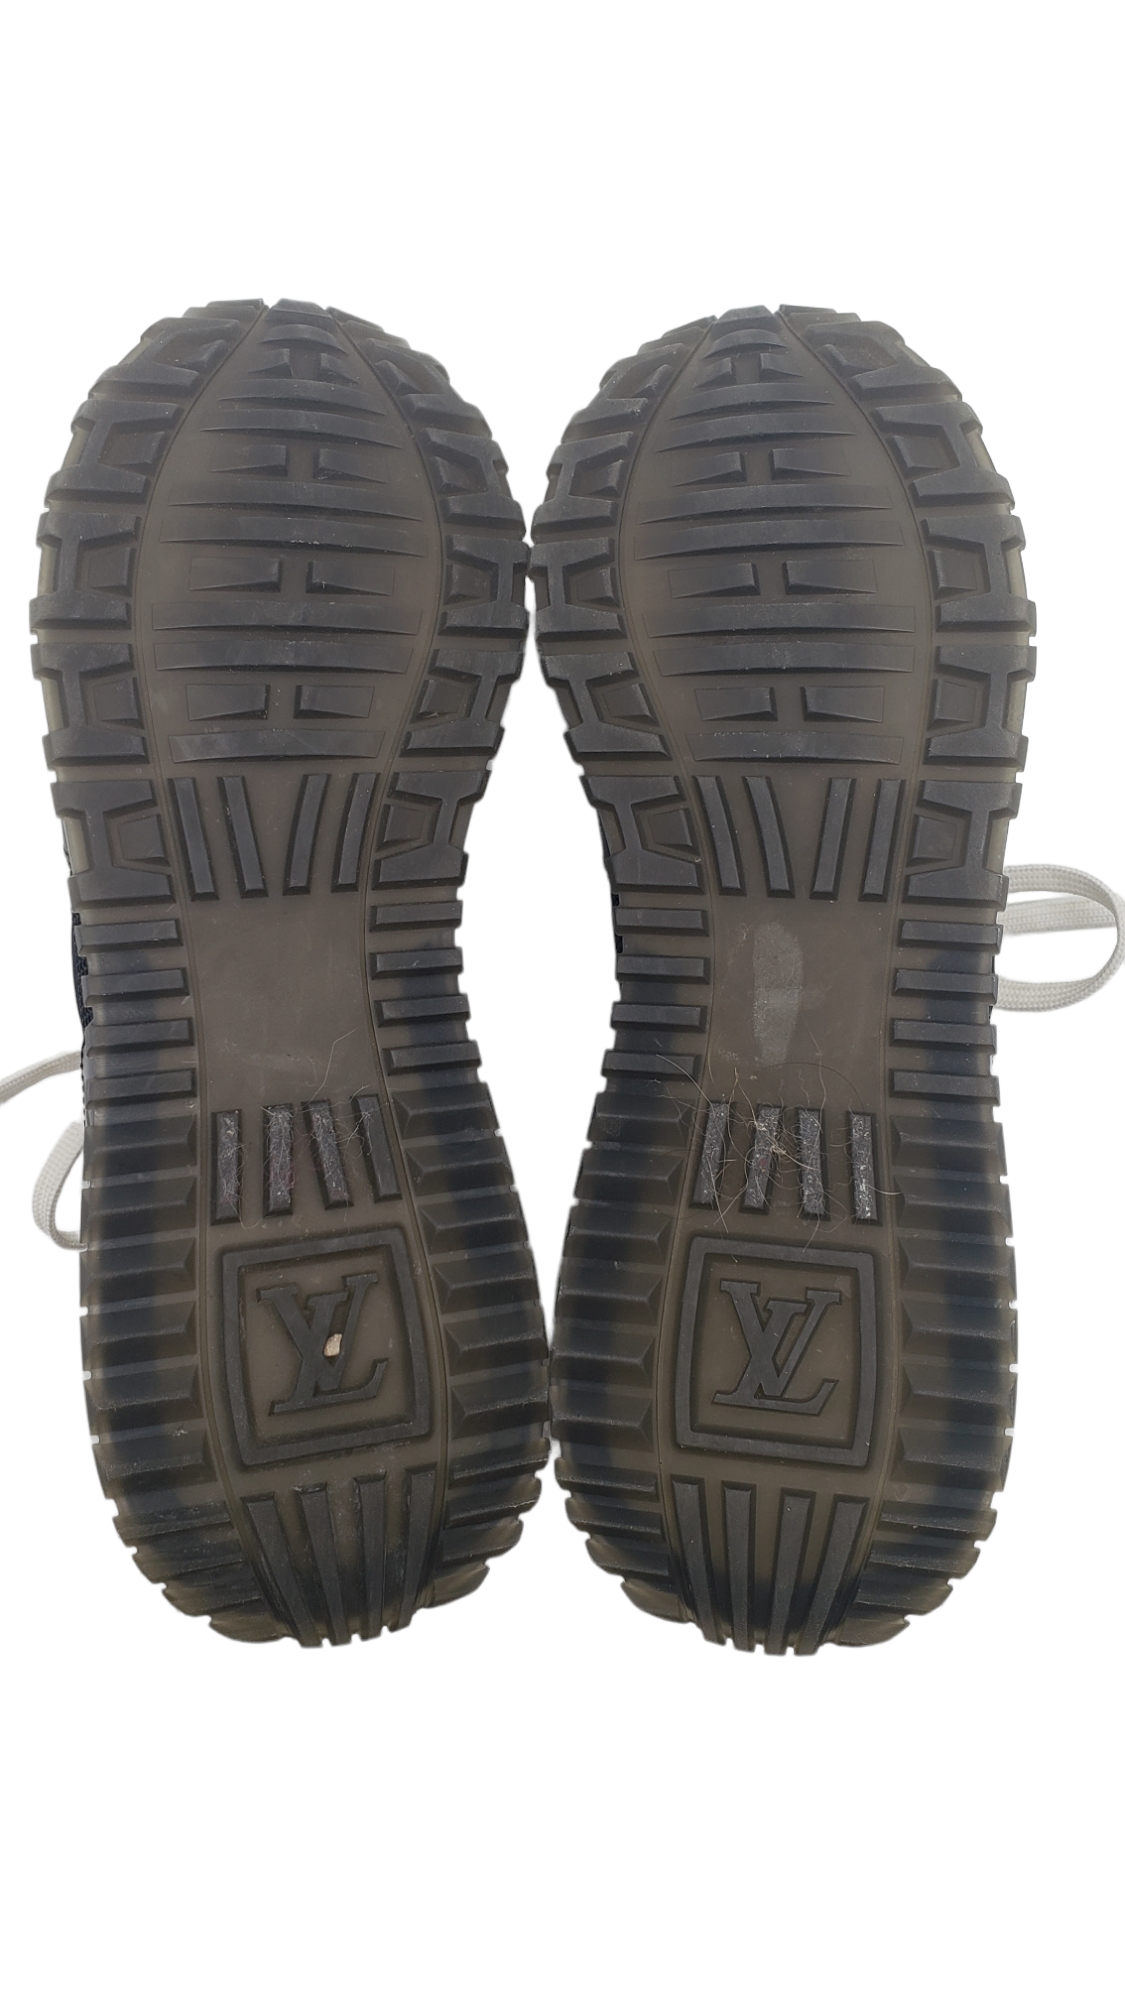 Louis Vuitton Black Run Away Size 37.5 Sneakers